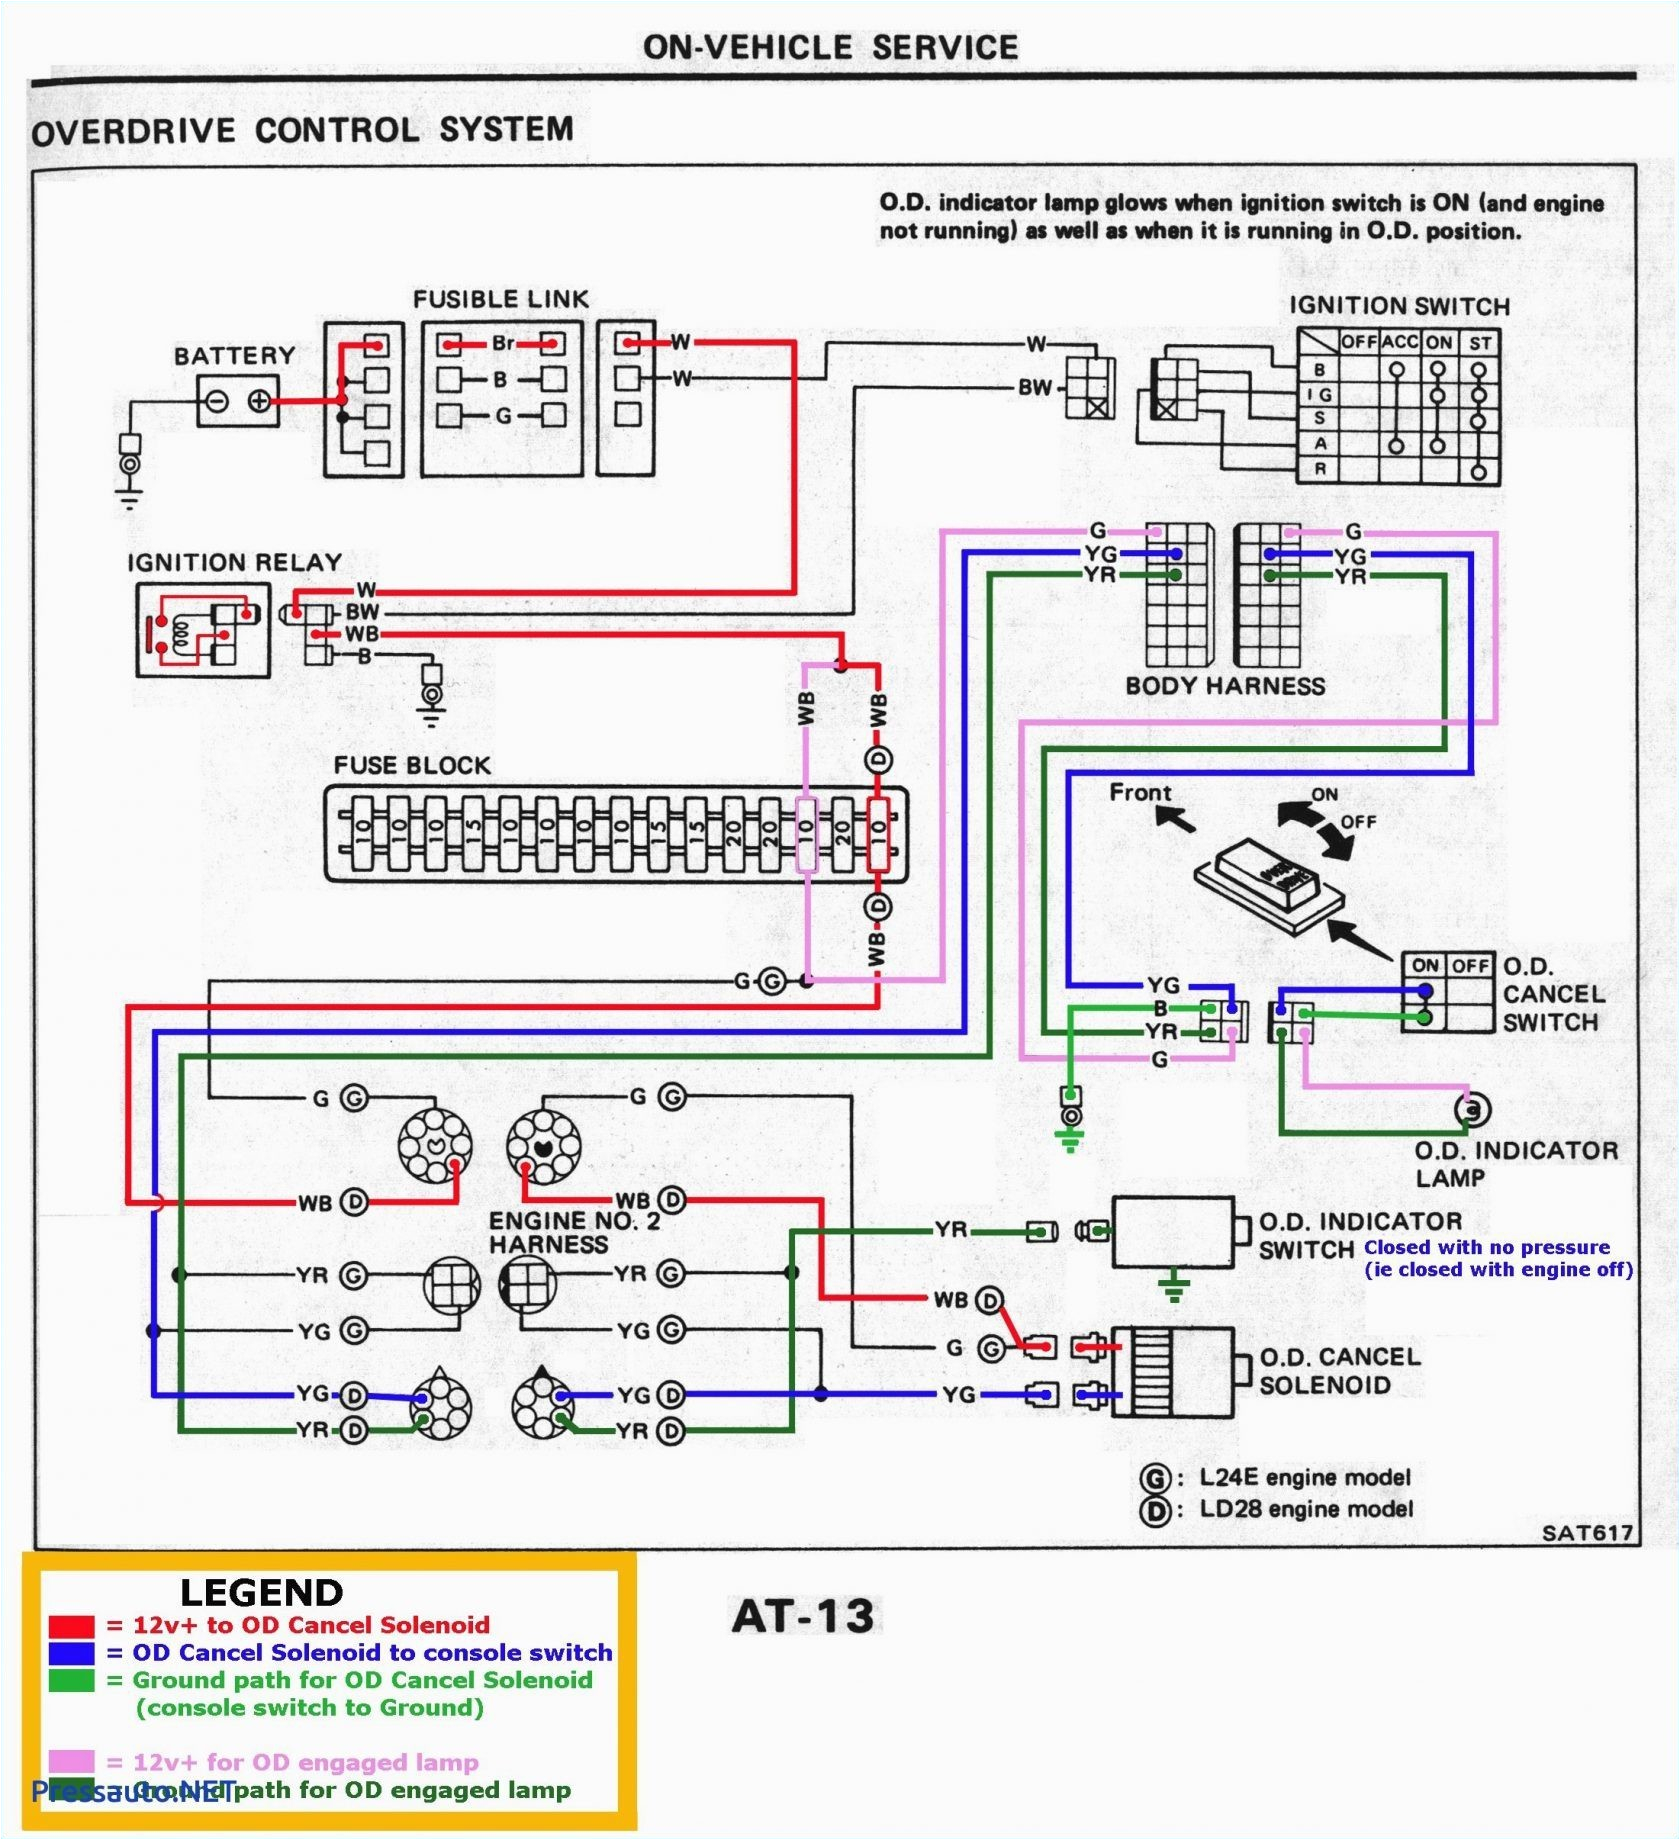 index 115 basic circuit circuit diagram seekiccom wiring diagram view basic hvac control wiring http wwwseekiccom circuitdiagram